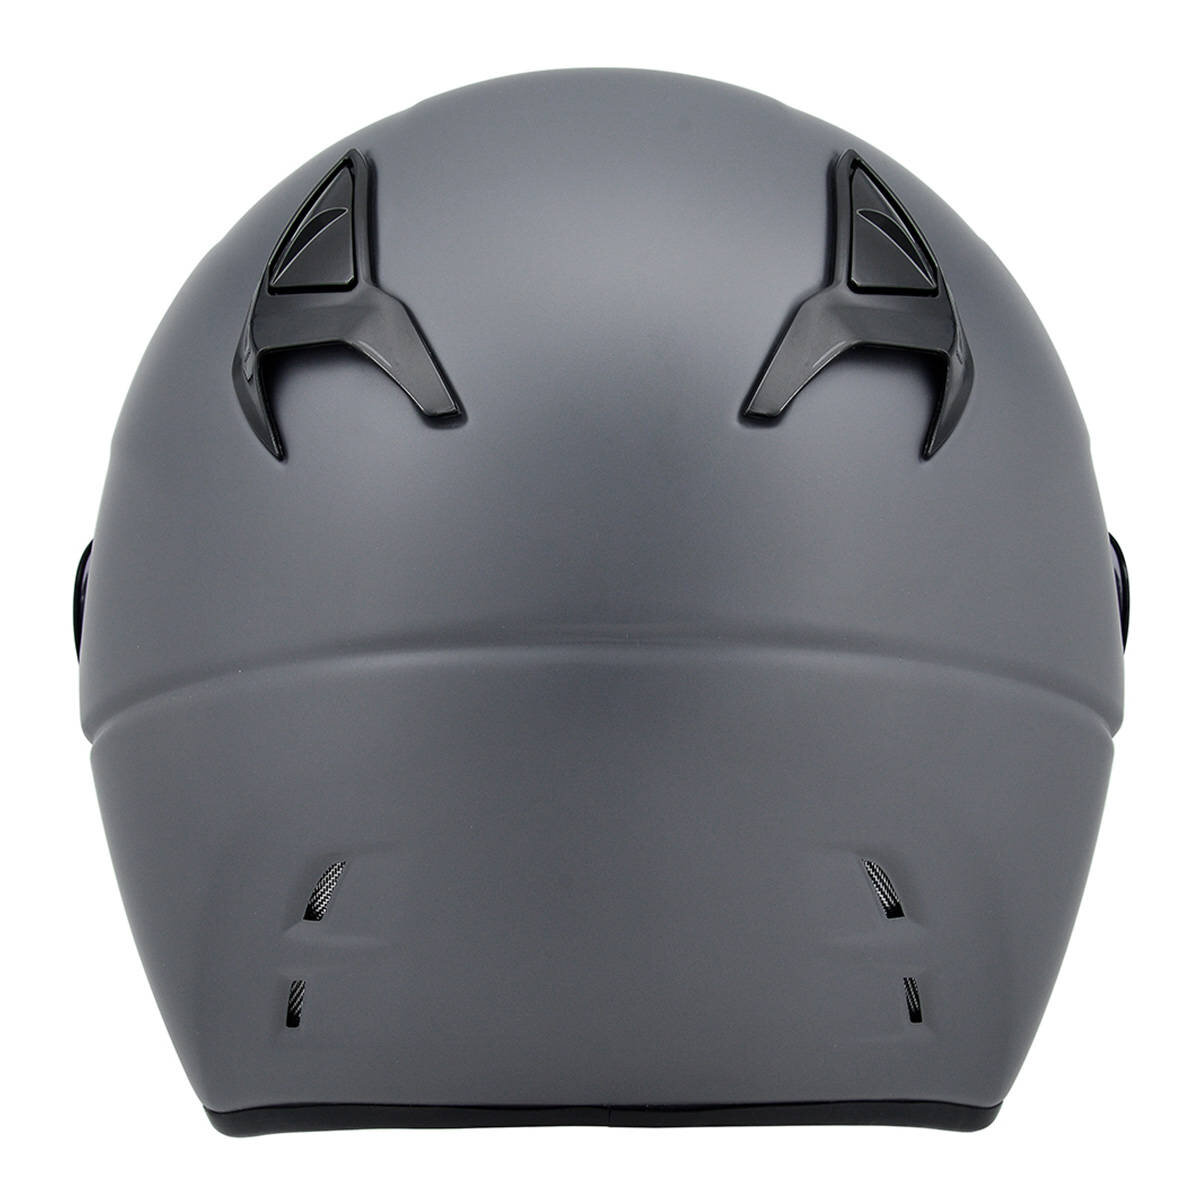 M2R 3/4罩安全帽 騎乘機車用防護頭盔 M-700 消光灰 M